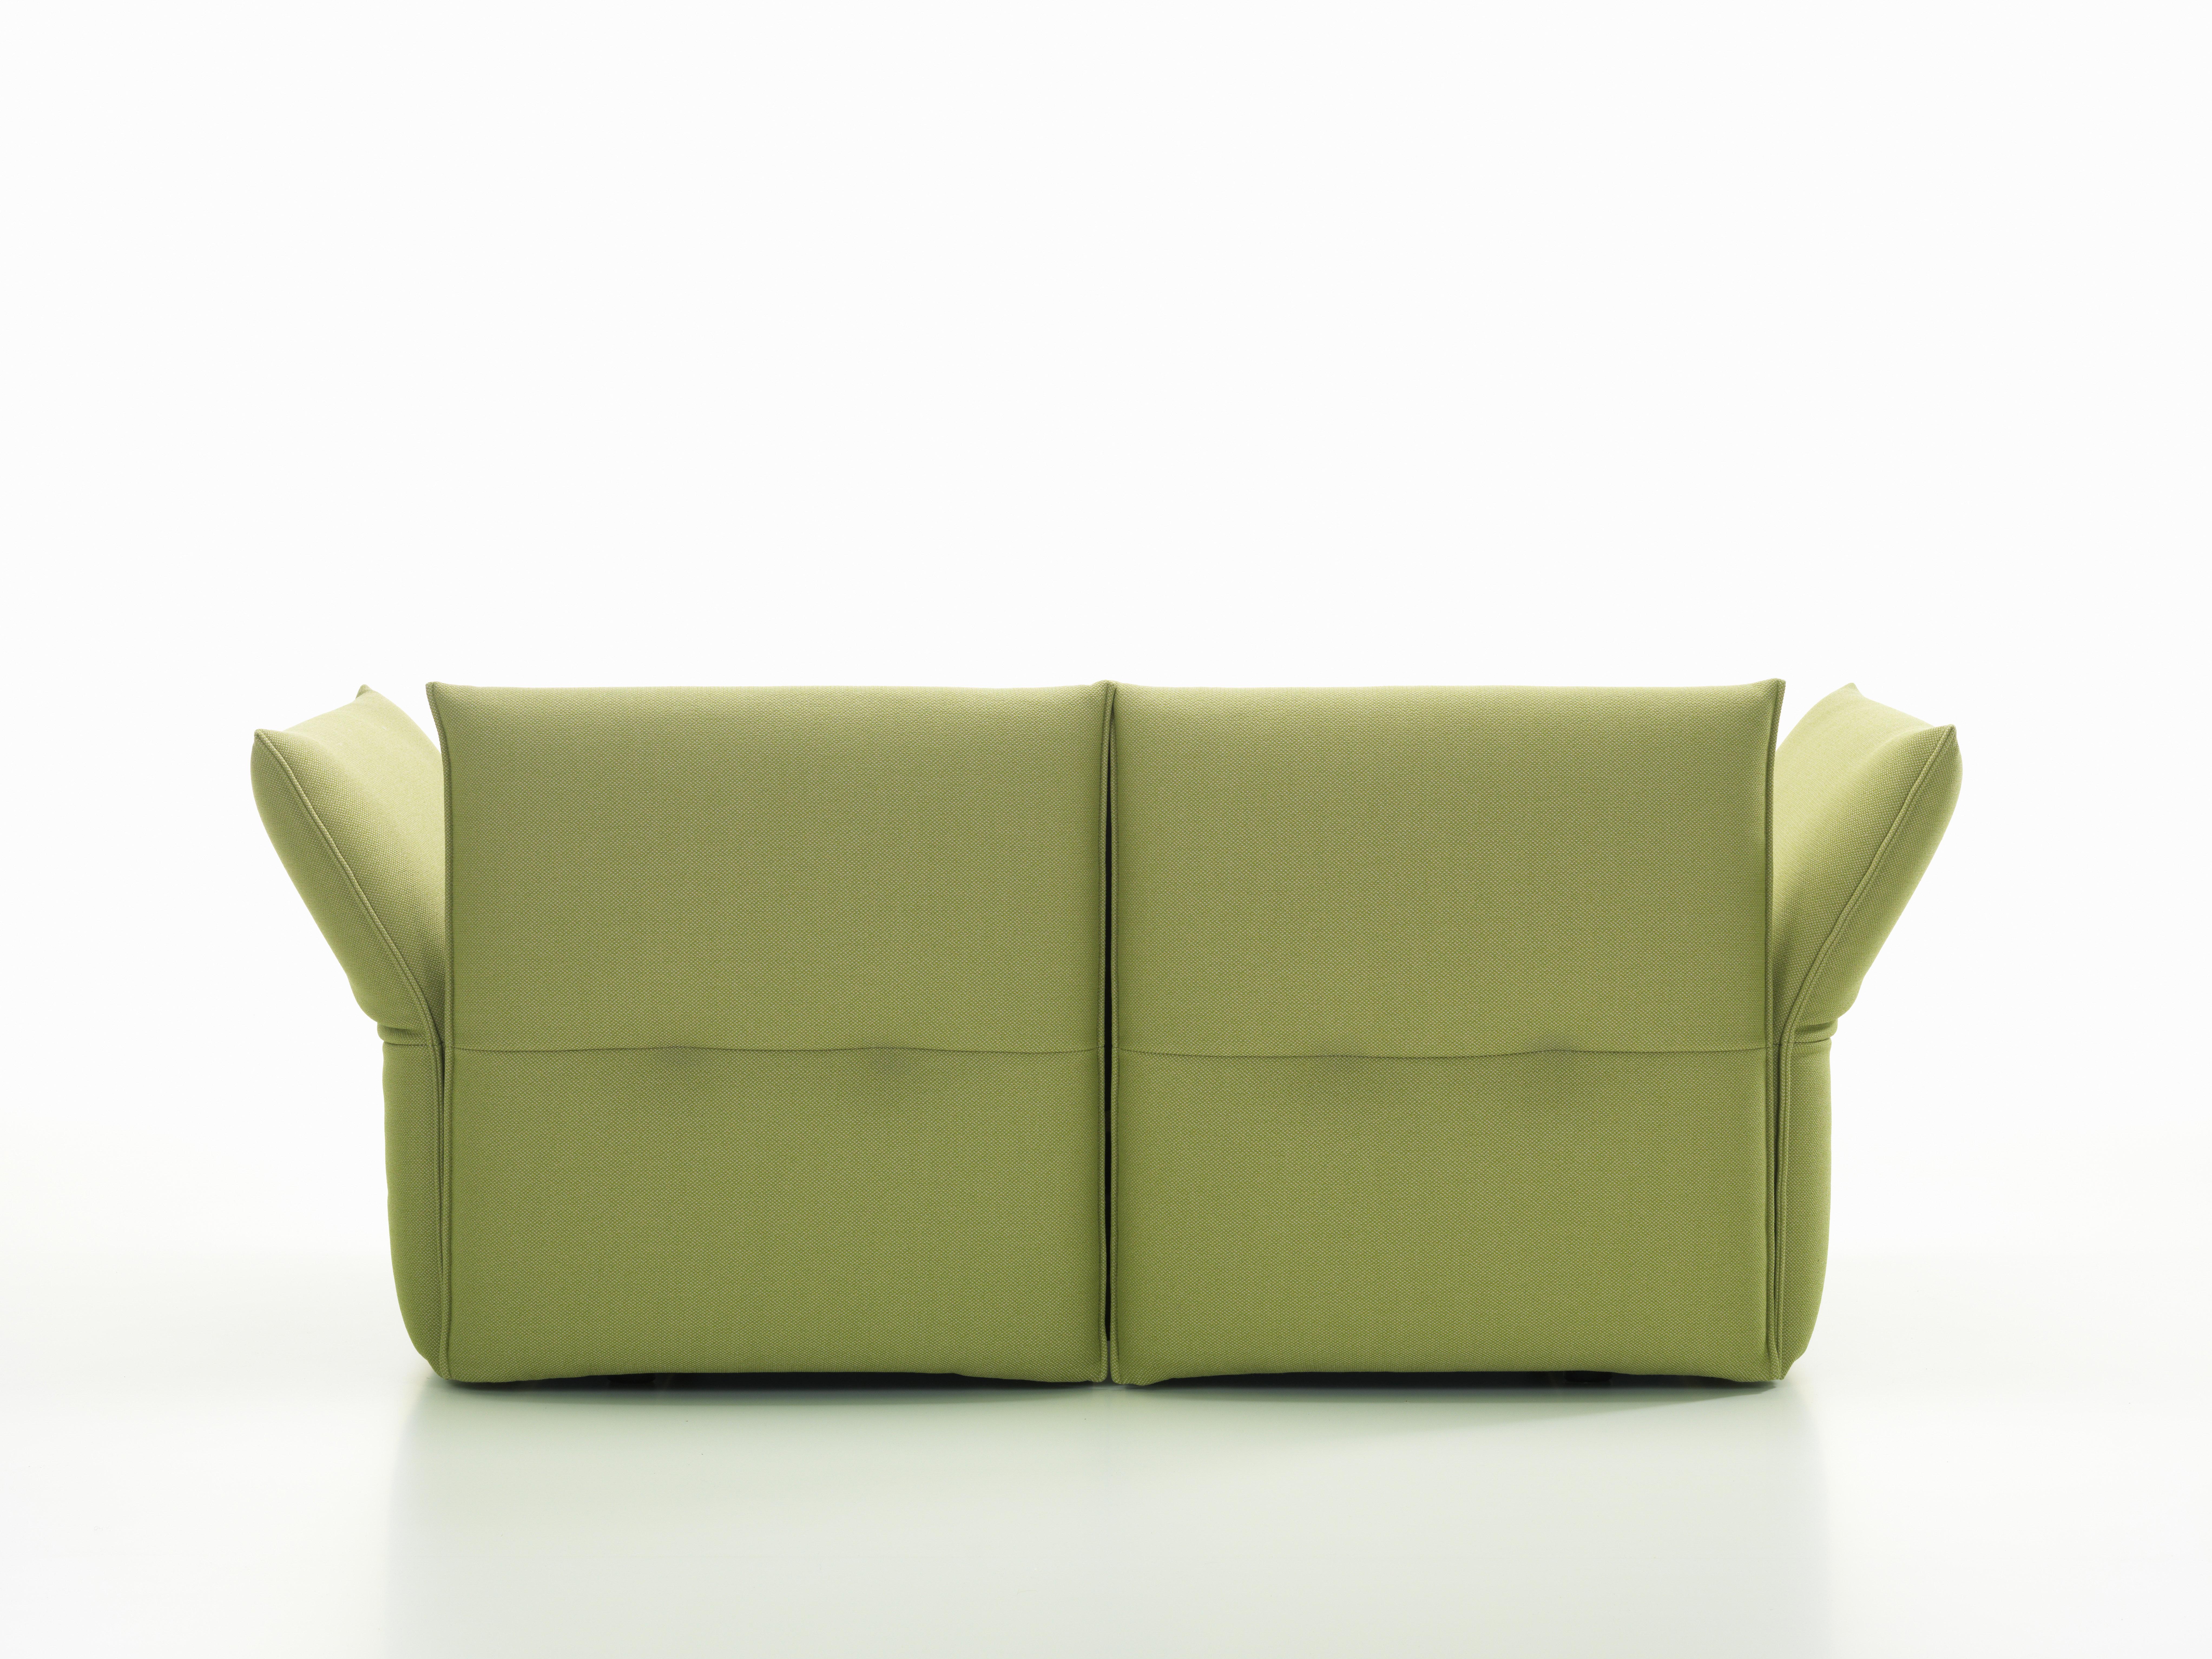 Vitra Mariposa 2-Seat Sofa in Sand & Avocado Credo by Edward Barber & Jay For Sale 4